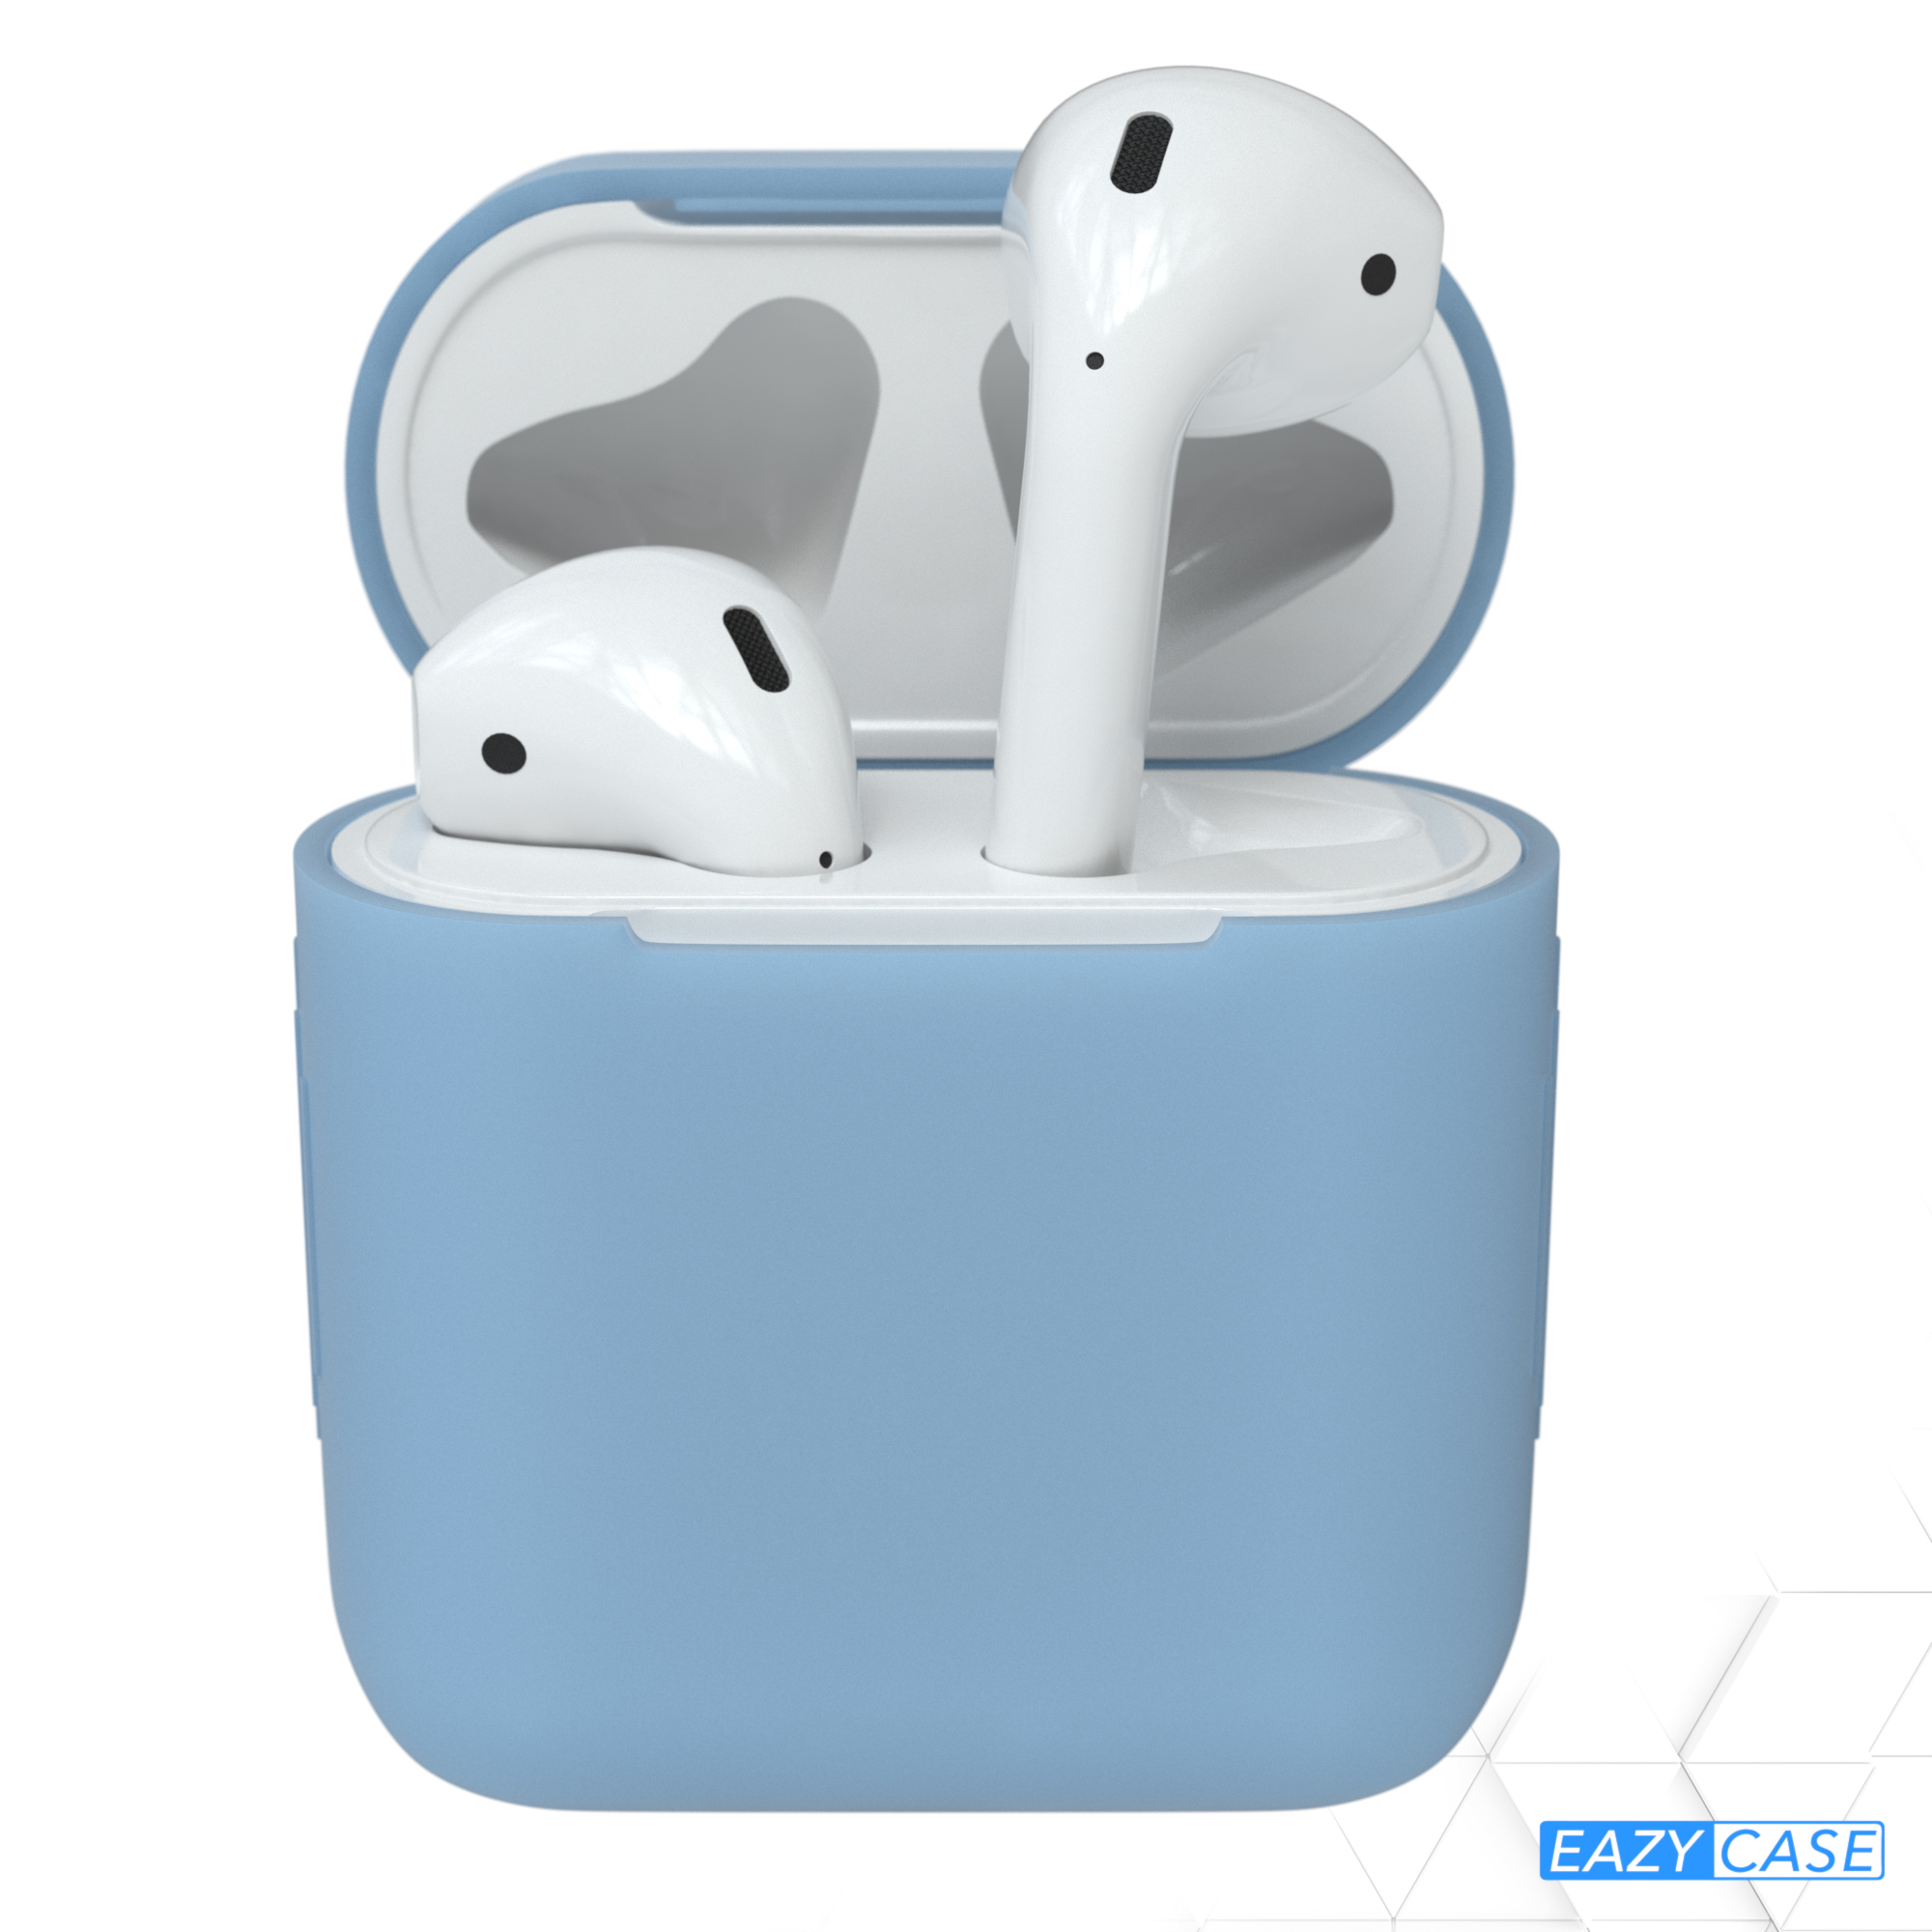 Helllblau Blau für: Schutzhülle / Sleeve passend AirPods EAZY Silikon Apple CASE Case